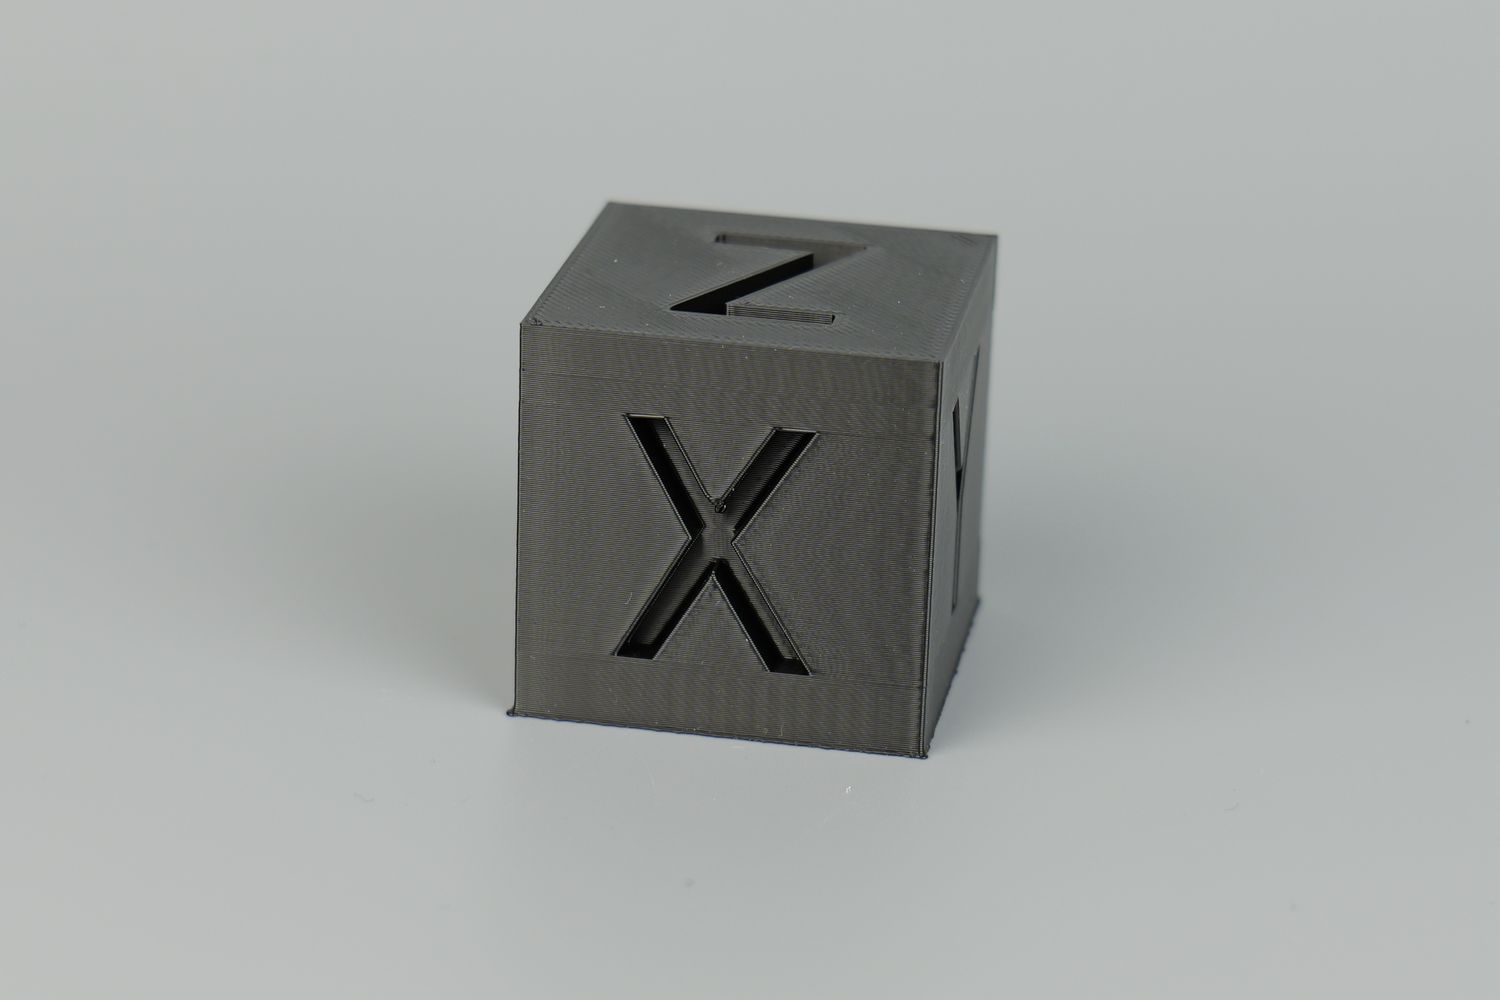 200 Calibration Cube on QIDI X MAX 31 | QIDI X-MAX 3 Review: Big Printer with Good Results